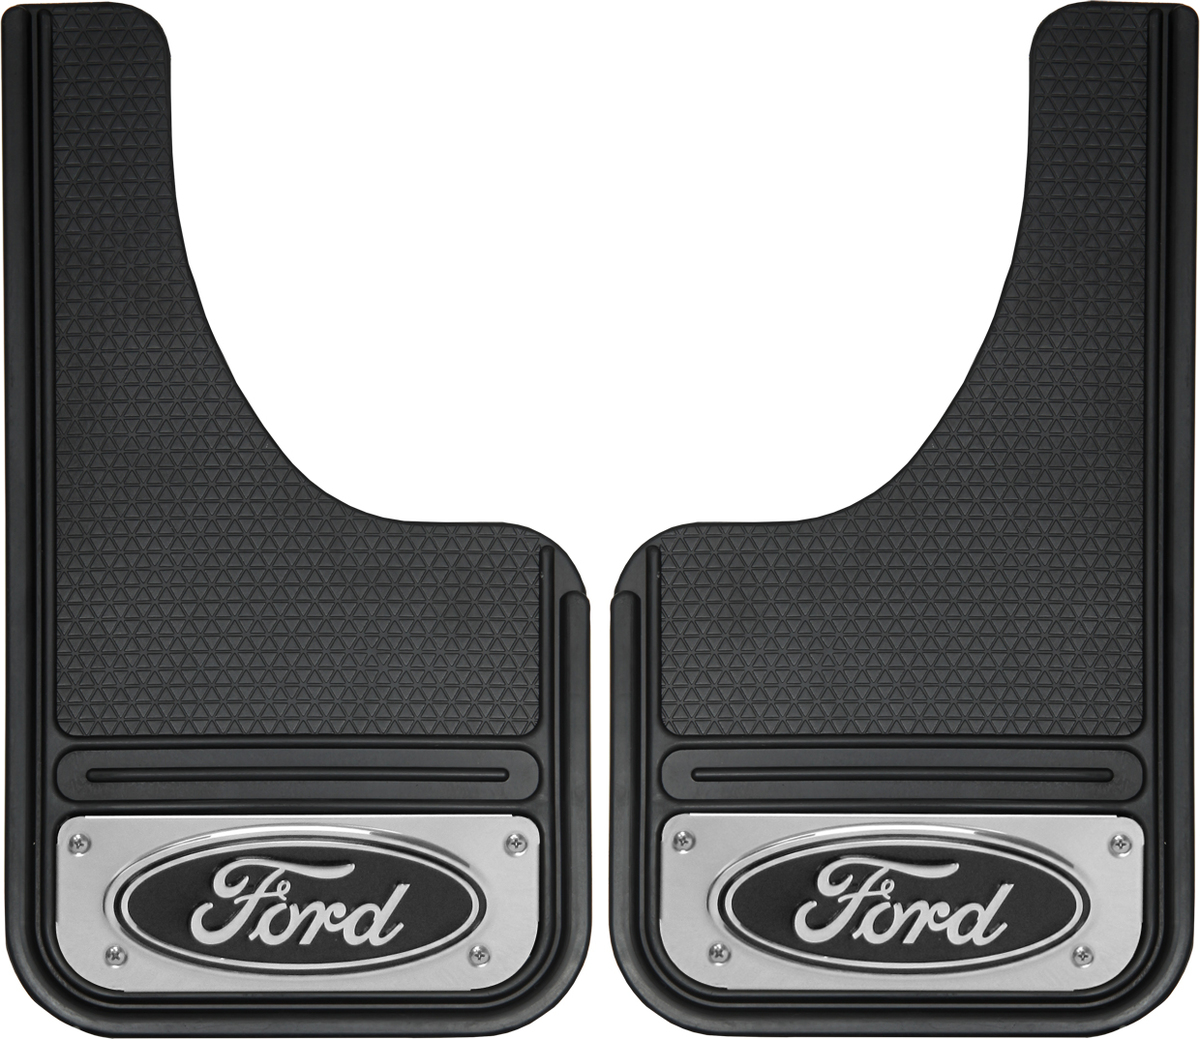 Ford logo truck mud flaps #1